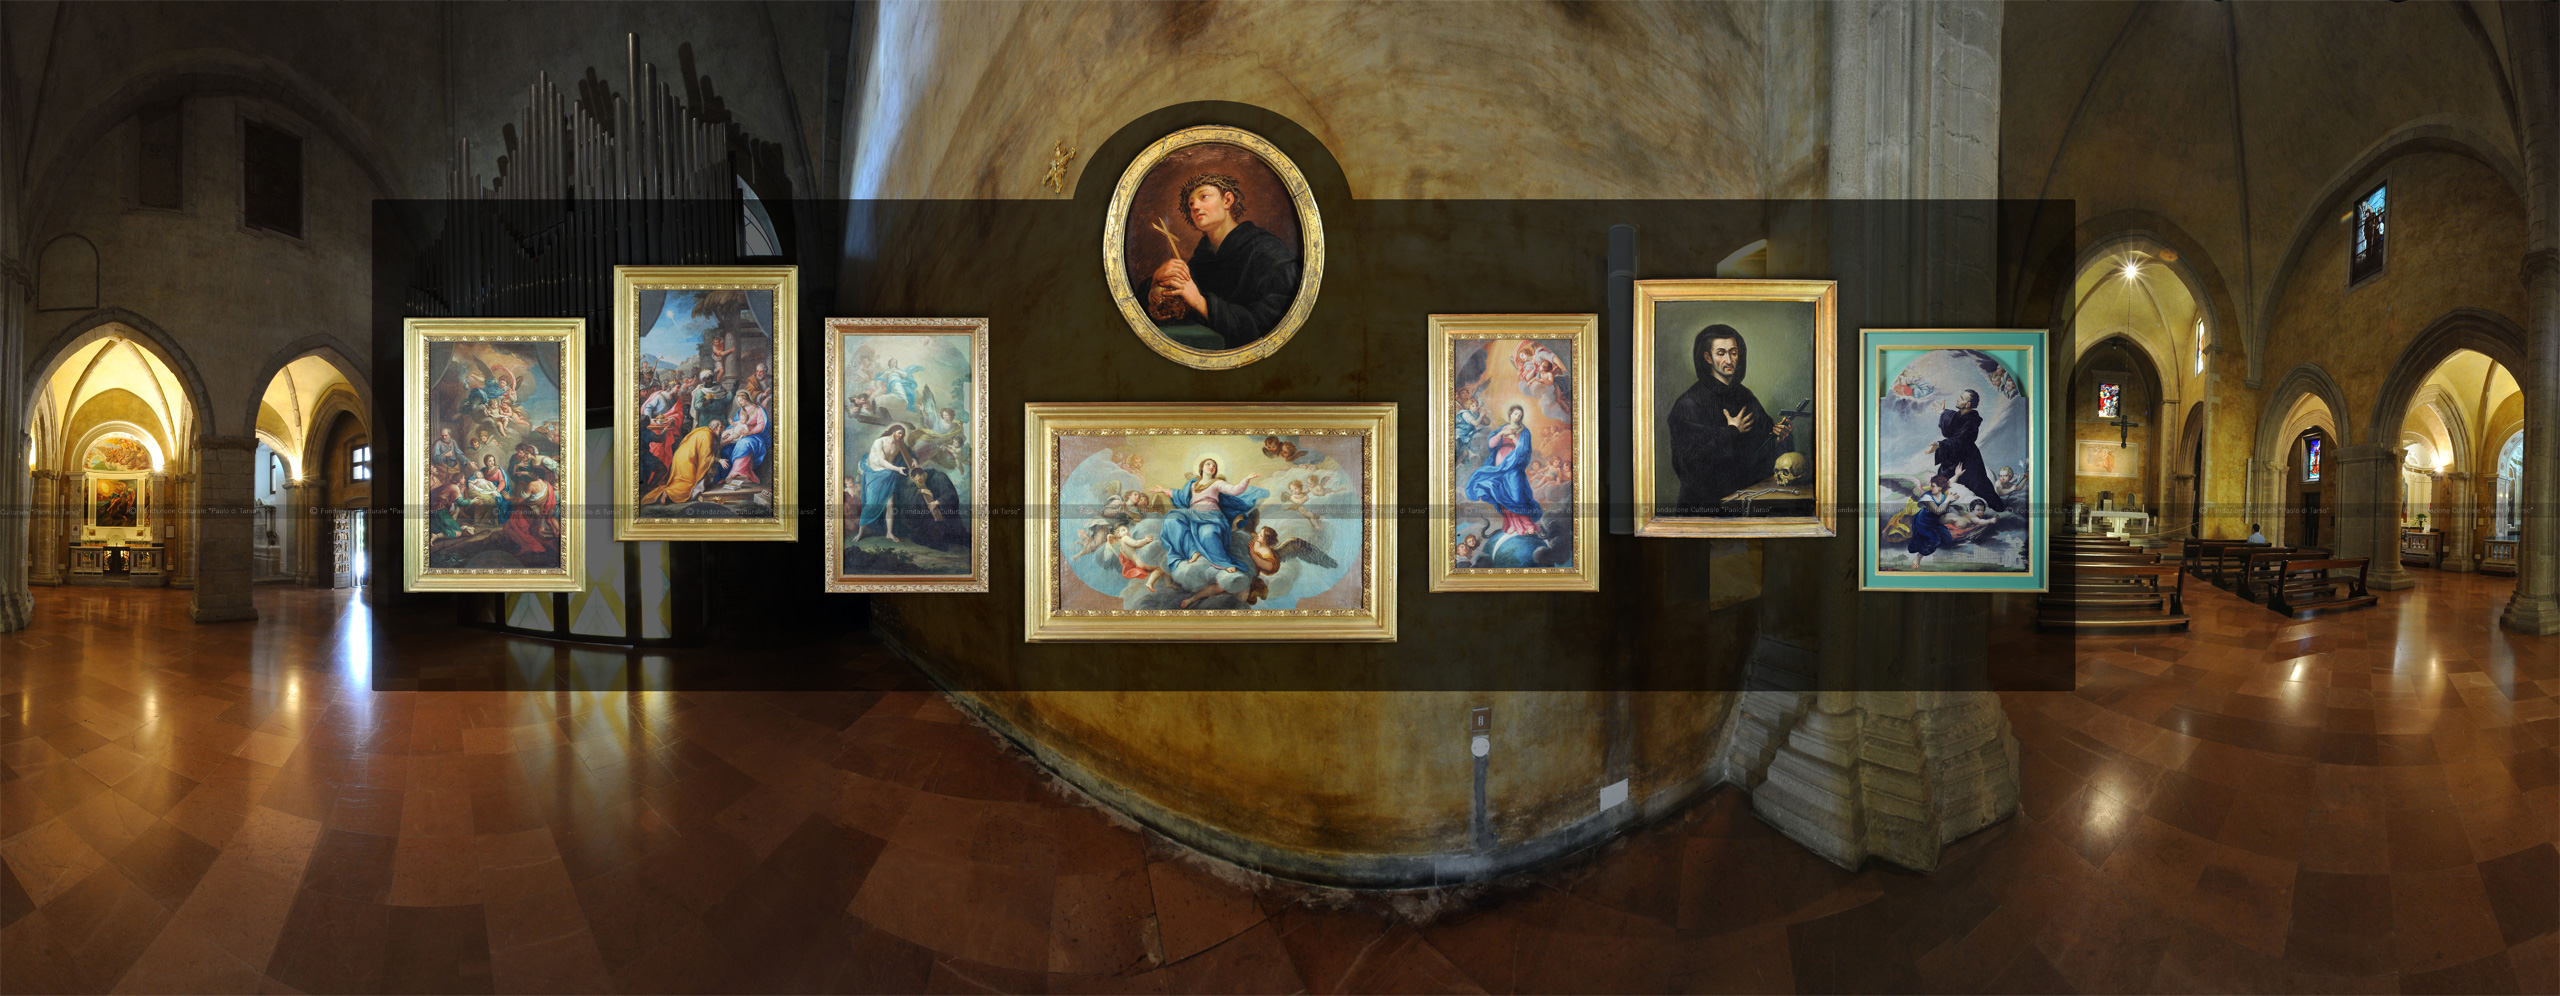 Metaverso Cosenza - Musei Digitali Santuario San Francesco di Paola Pinacoteca